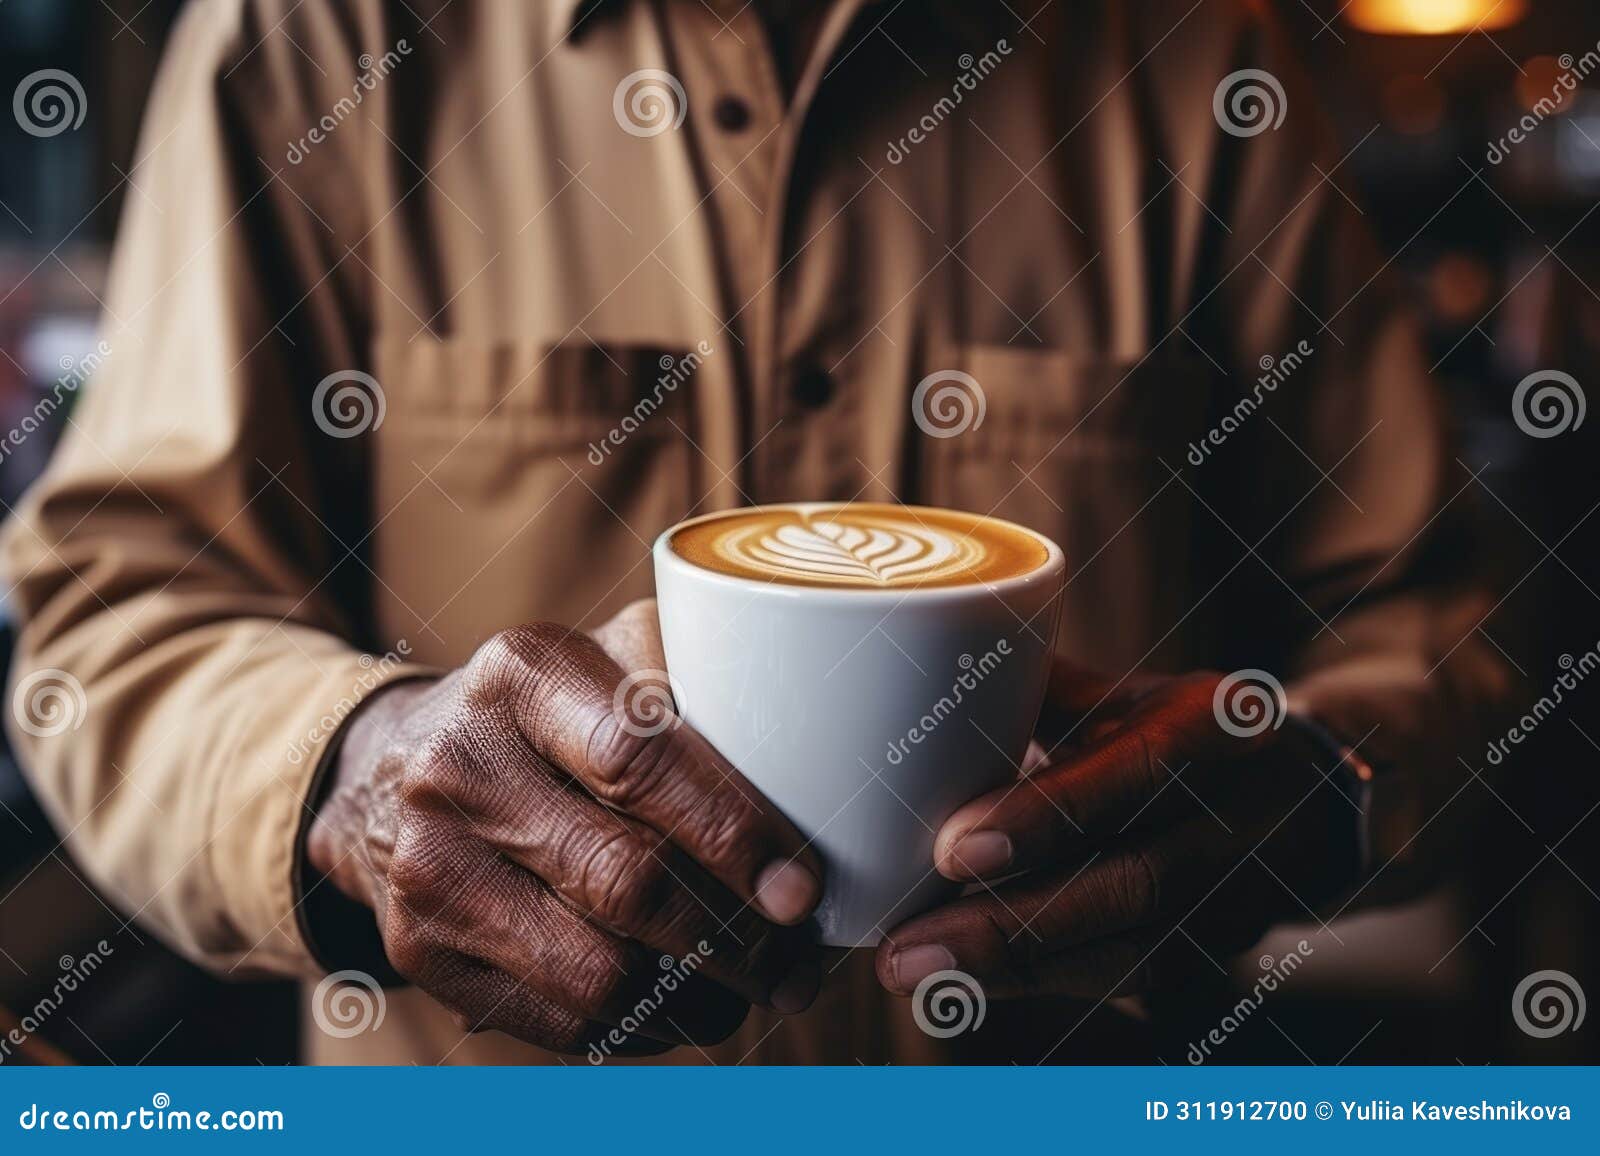 barista serve cup hot tasty coffee grounds beans cozy cafe drinking cocoa cappuccino americano espresso latte art aroma